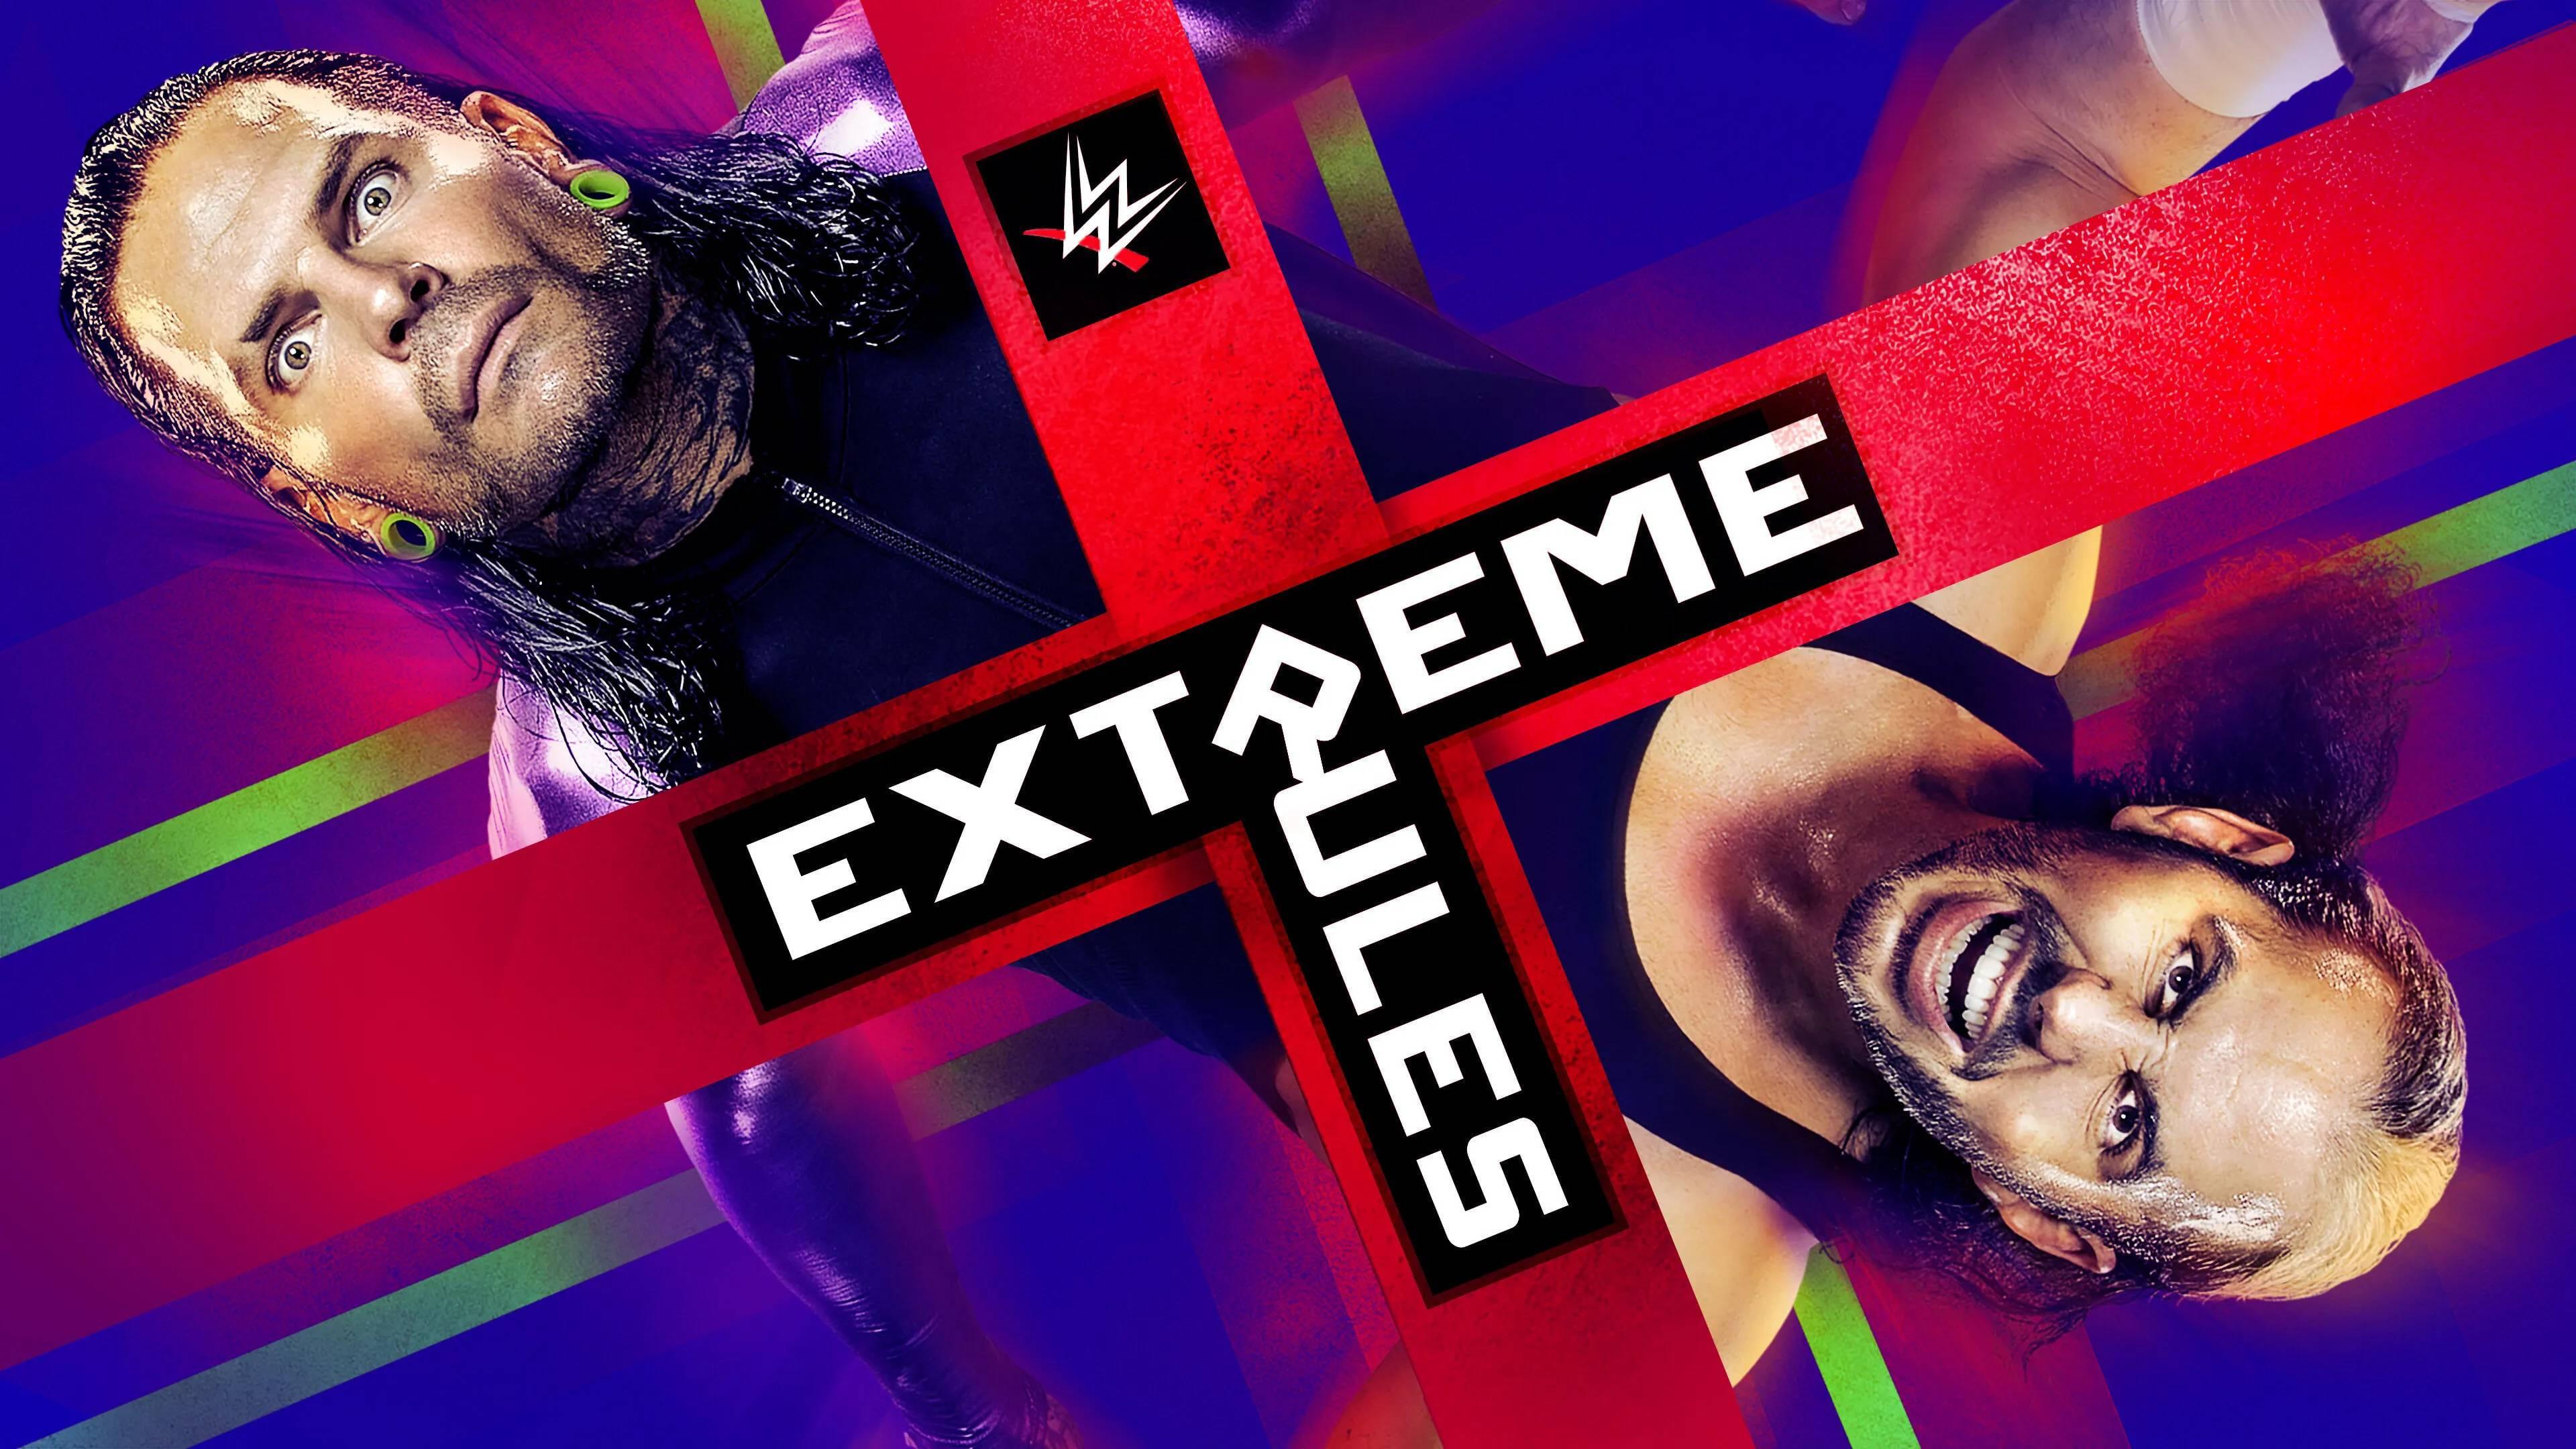 WWE Extreme Rules 2017 backdrop